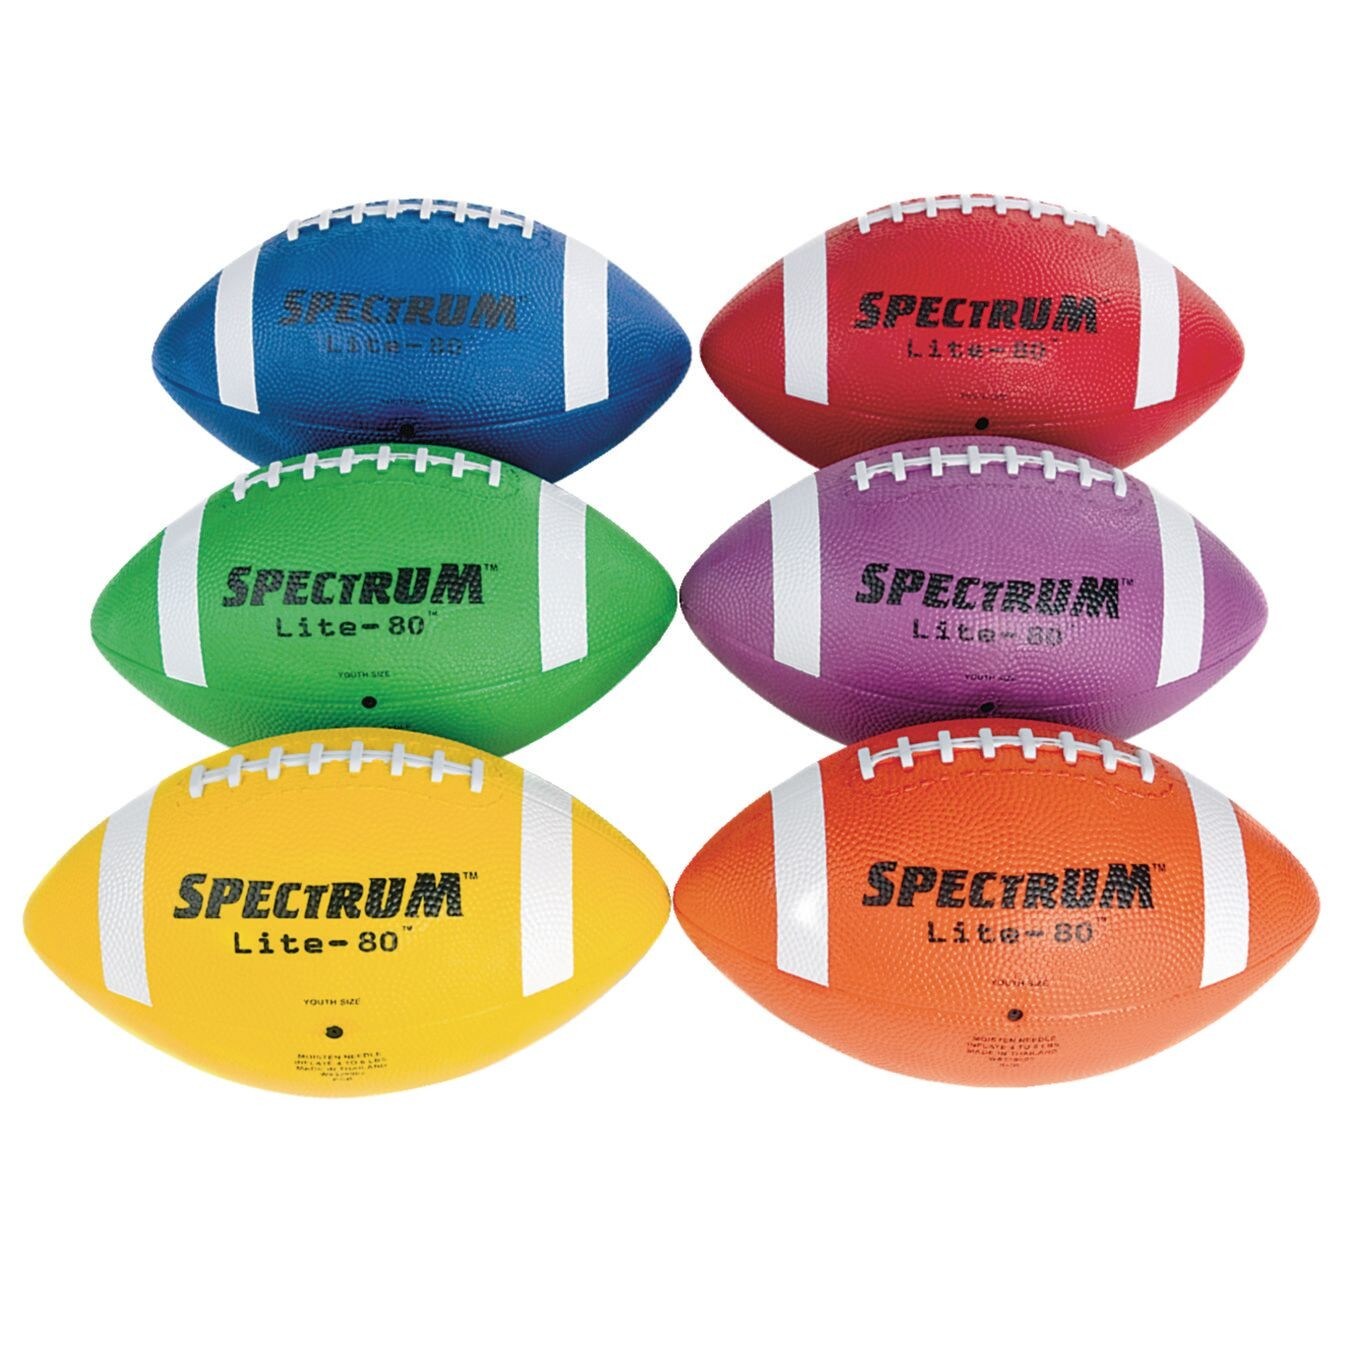 Spectrum&#x2122;&#xA0;Lite-80&#x2122; Intermediate Rubber Football (Set of 6)